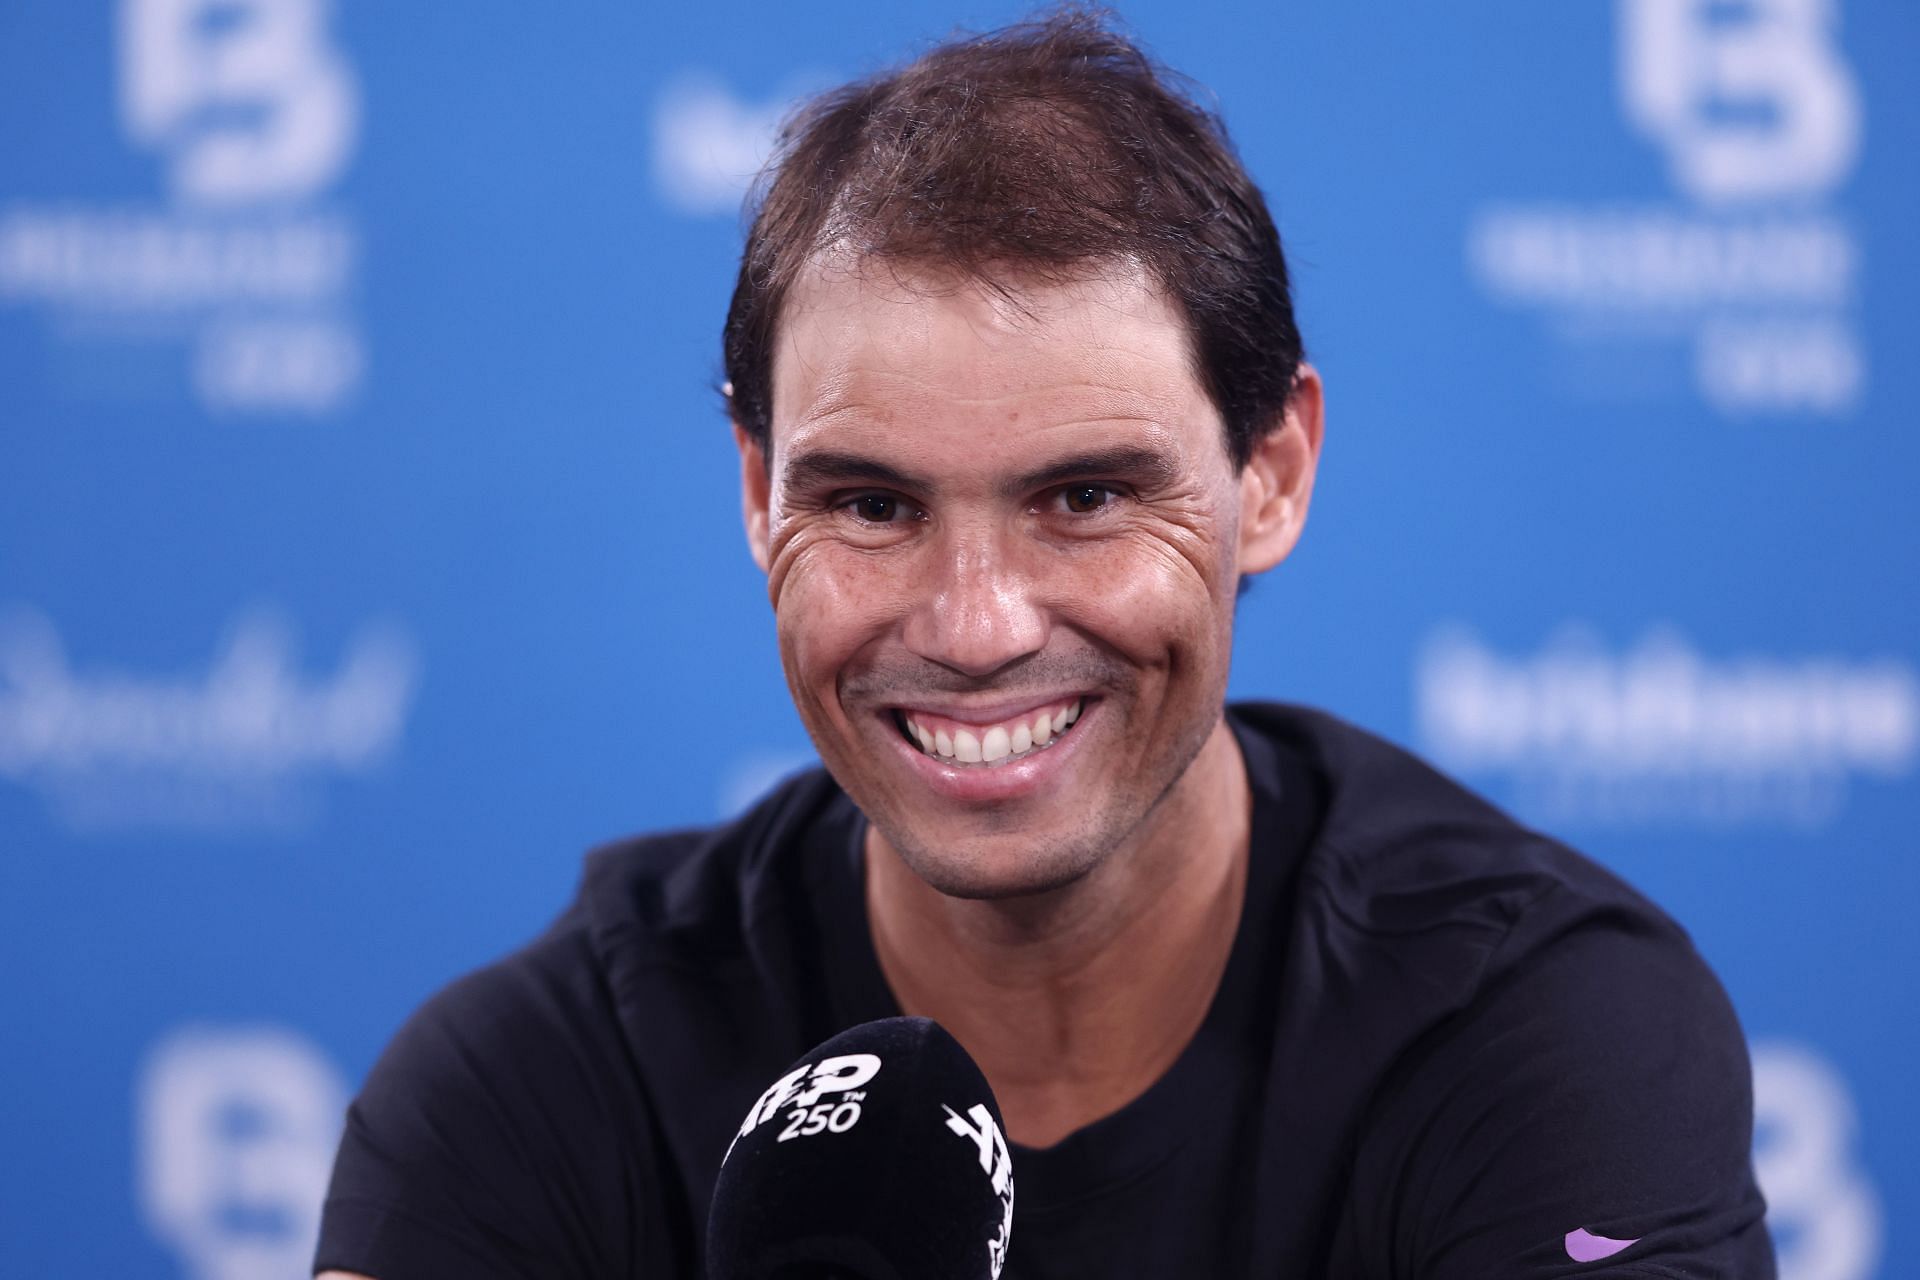 Rafael Nadal is a 22-time Grand Slam champion.